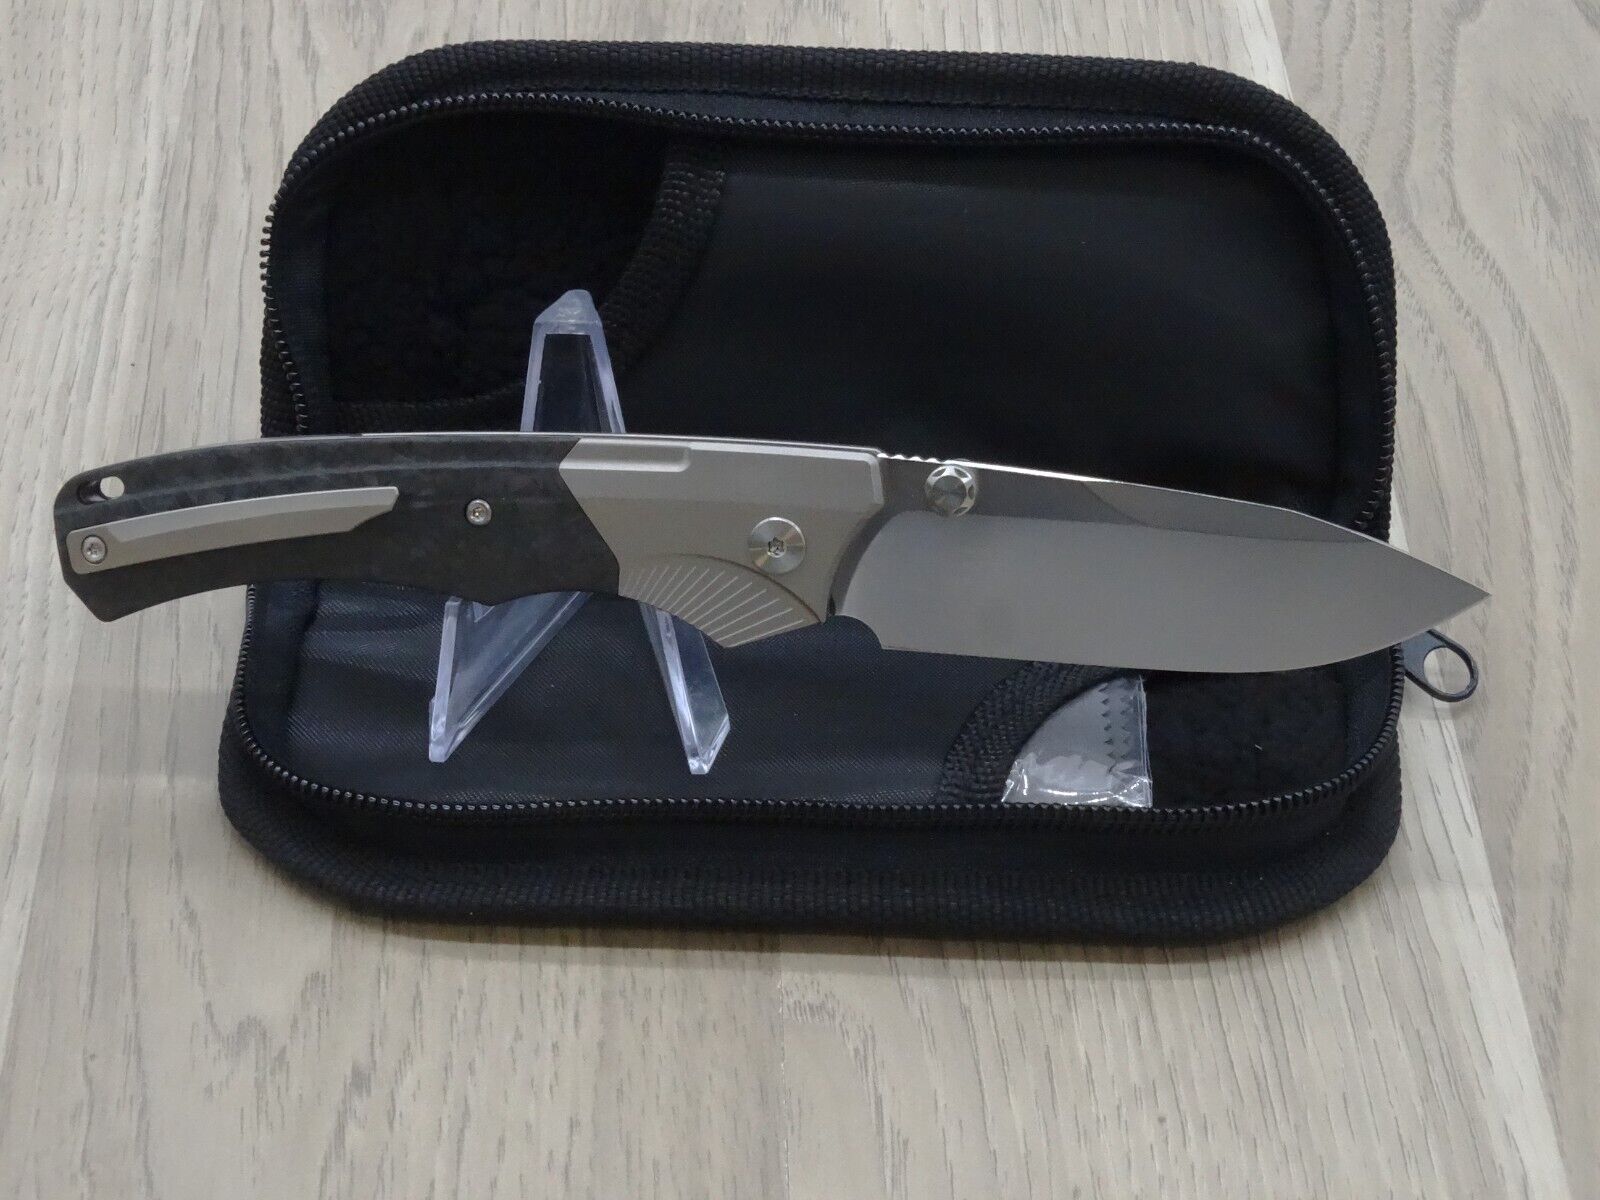  REMETTE WD107 Series Titanium Pocket Knife, EDC